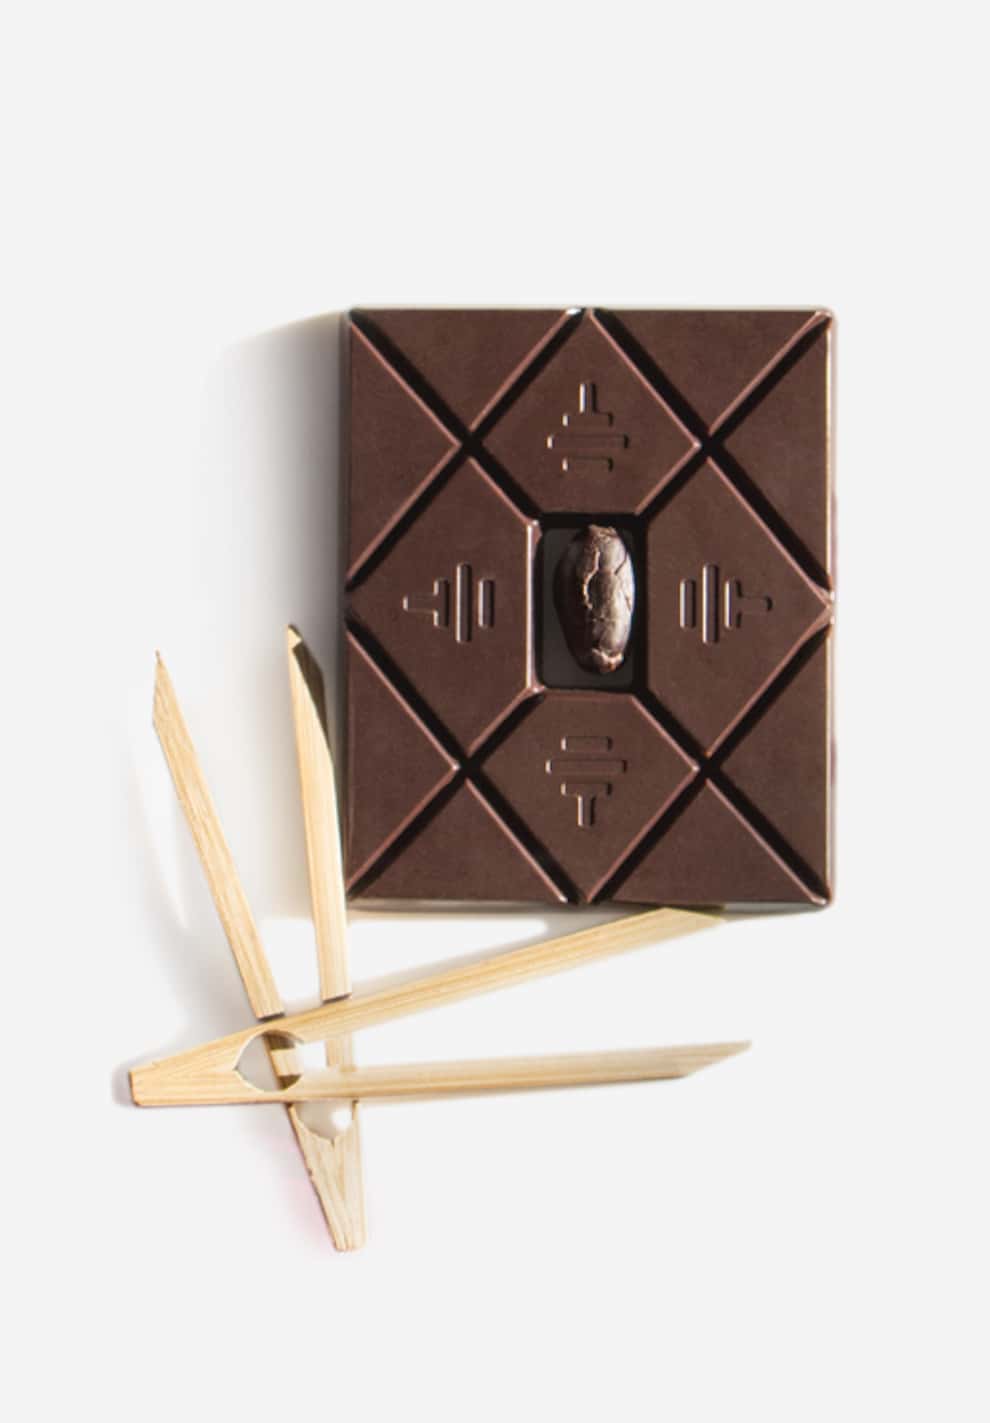 Chocolate tasting utensils